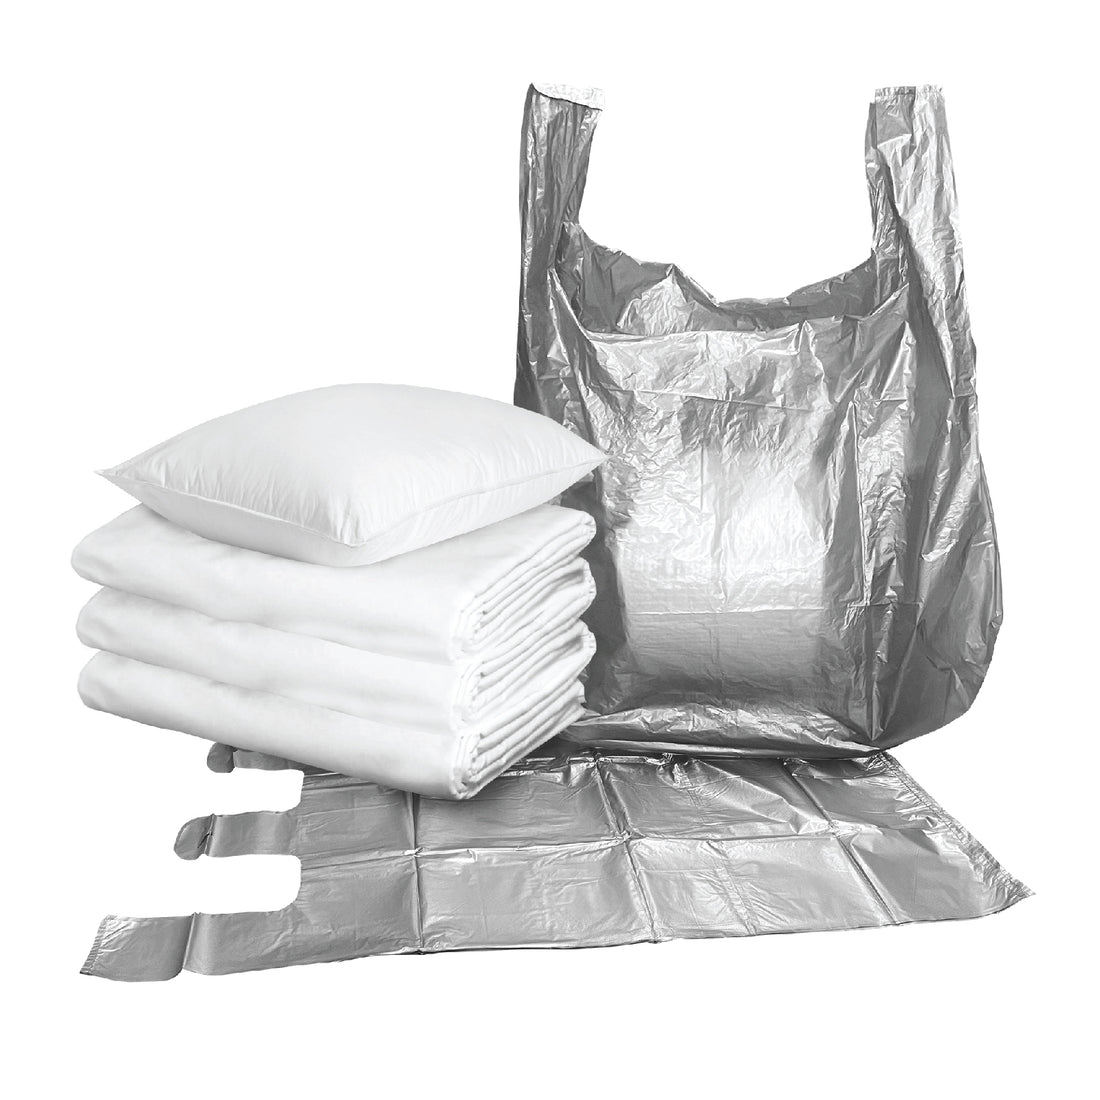 Jumbo Size Moving Vest-Shaped Storage Bag 大型厚料搬家背心收納袋